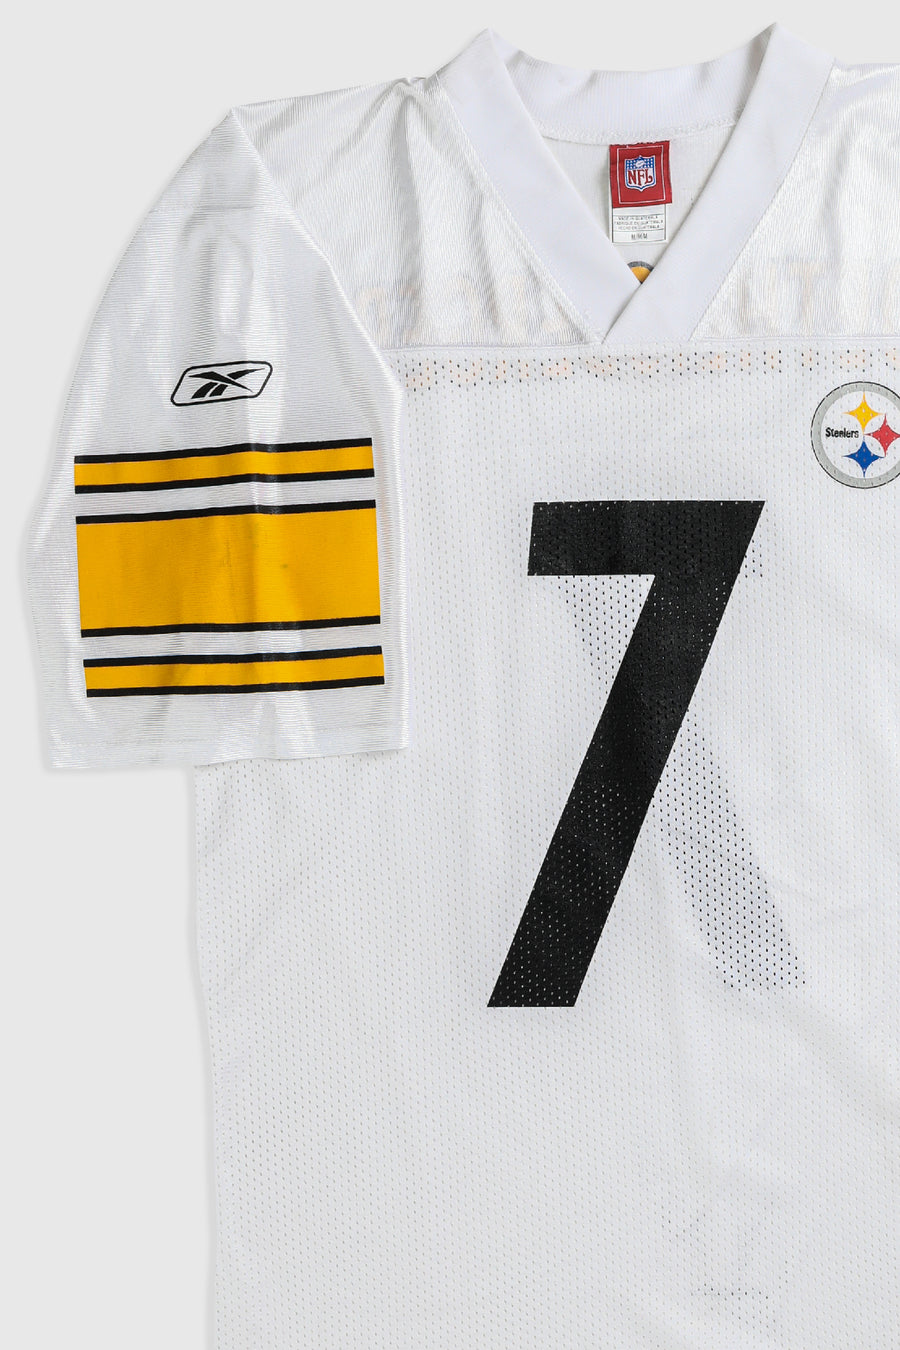 Vintage Pittsburgh Steelers Jersey